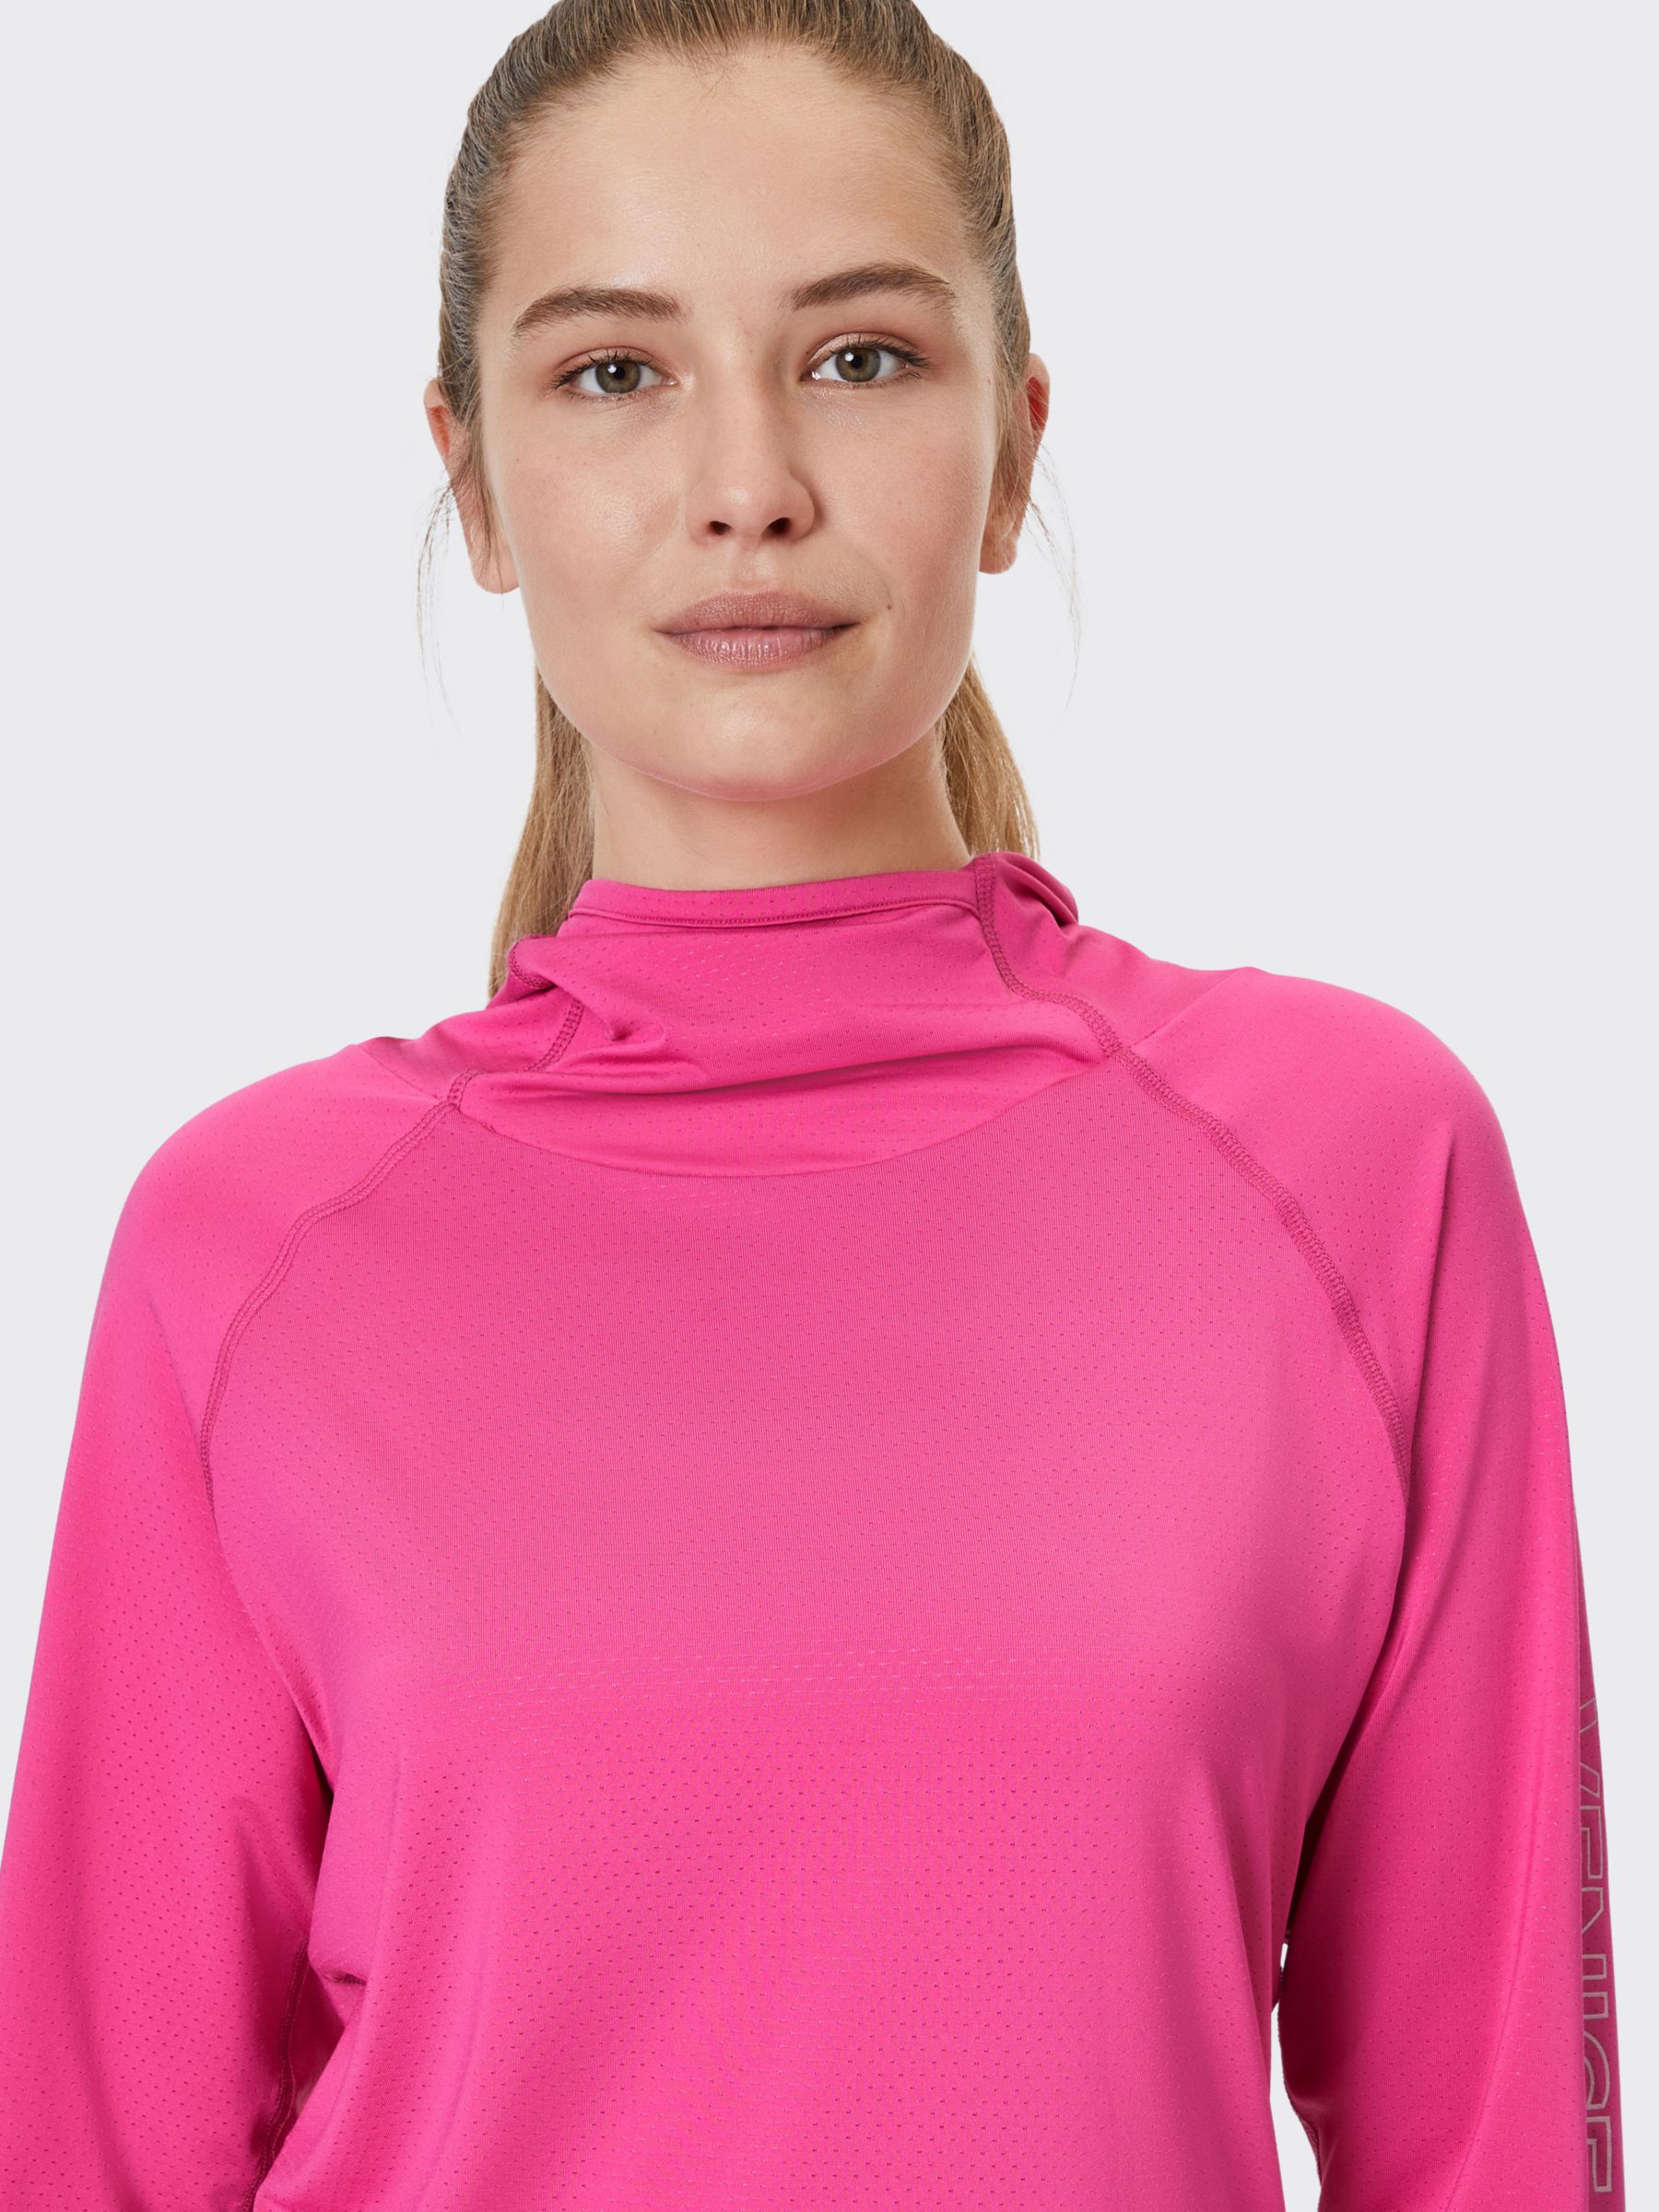 Venice Beach Minka Long Sleeve Hooded Top, Virtual Pink, XS